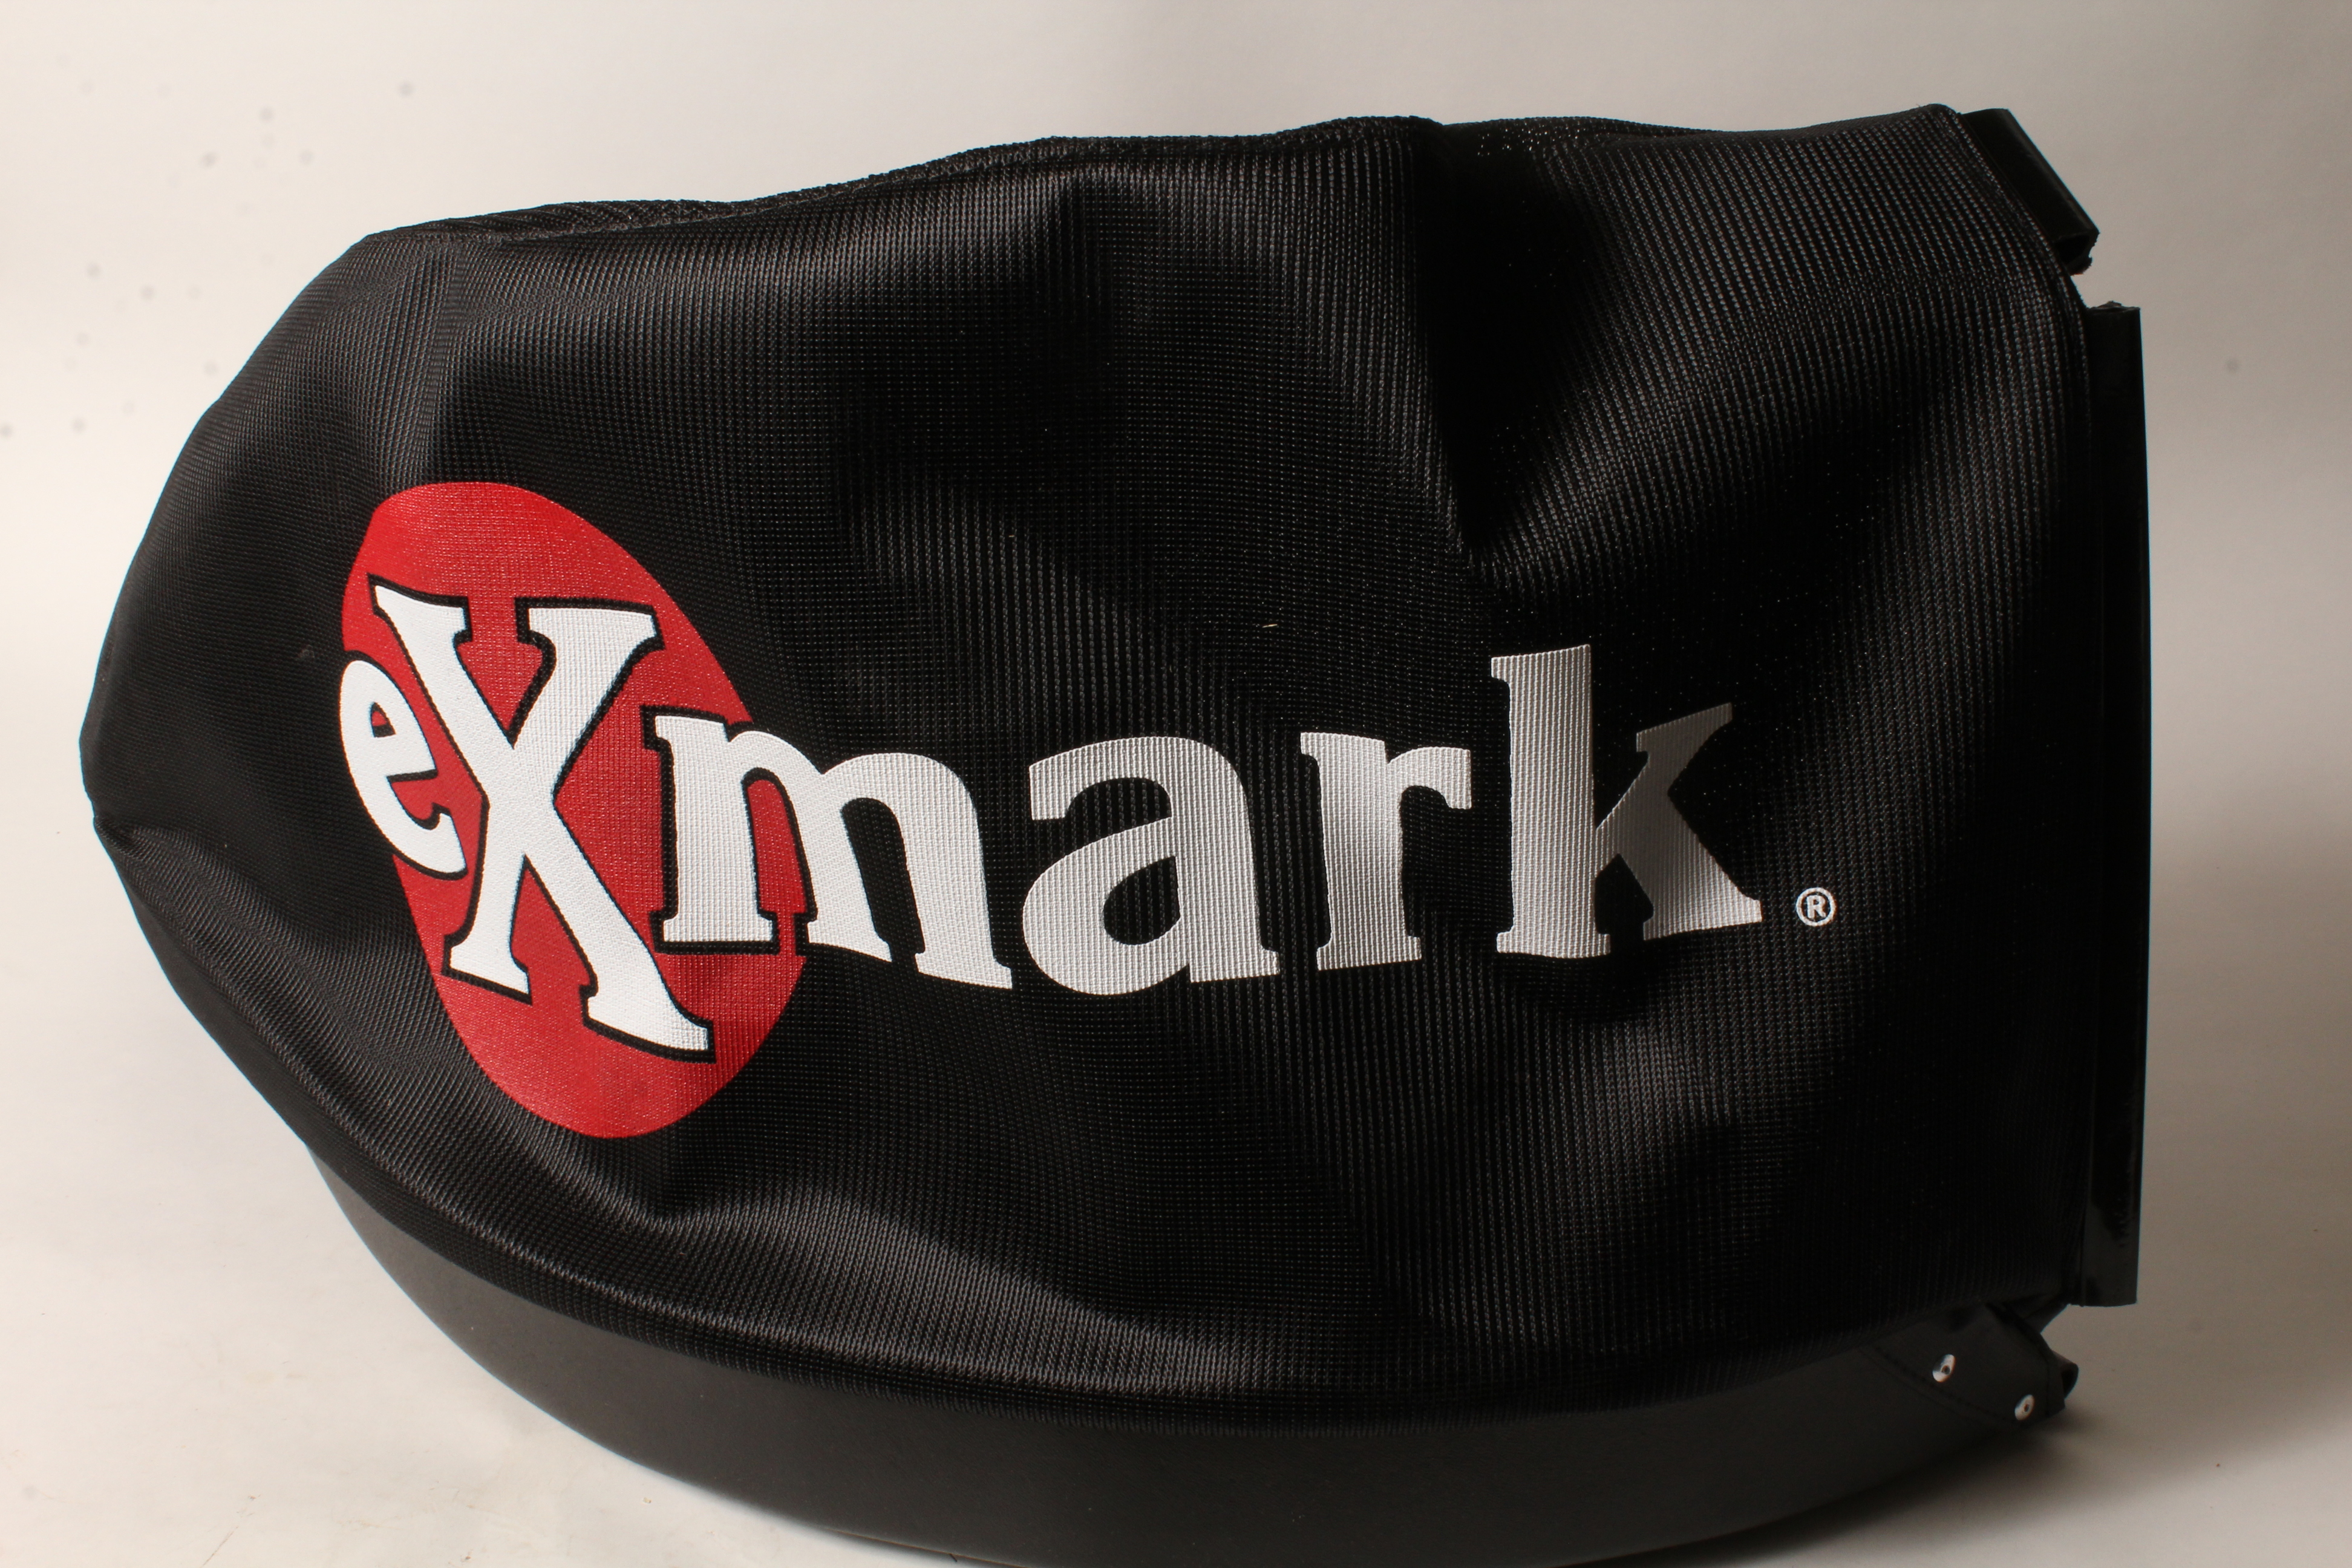 Exmark Genuine Exmark 126-3376 Grass Catcher and Pan Replaces 116-4370 OEM